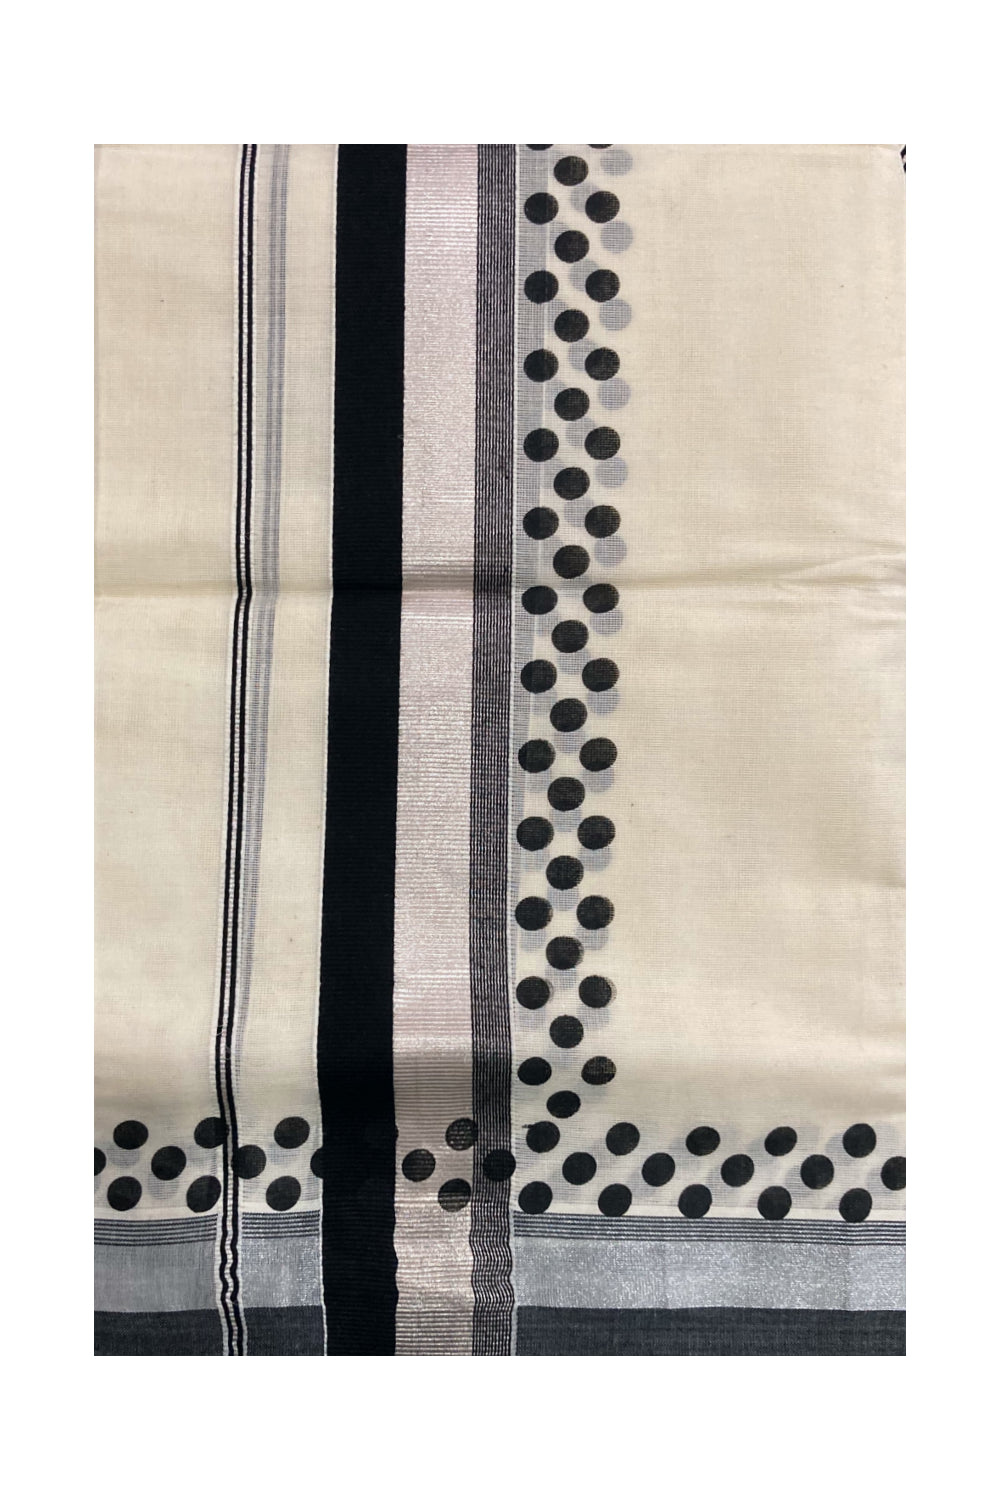 Kerala Cotton Single Mundum Neriyathum (Set Mundu) with Block Prints on Silver Kasavu and Black Border